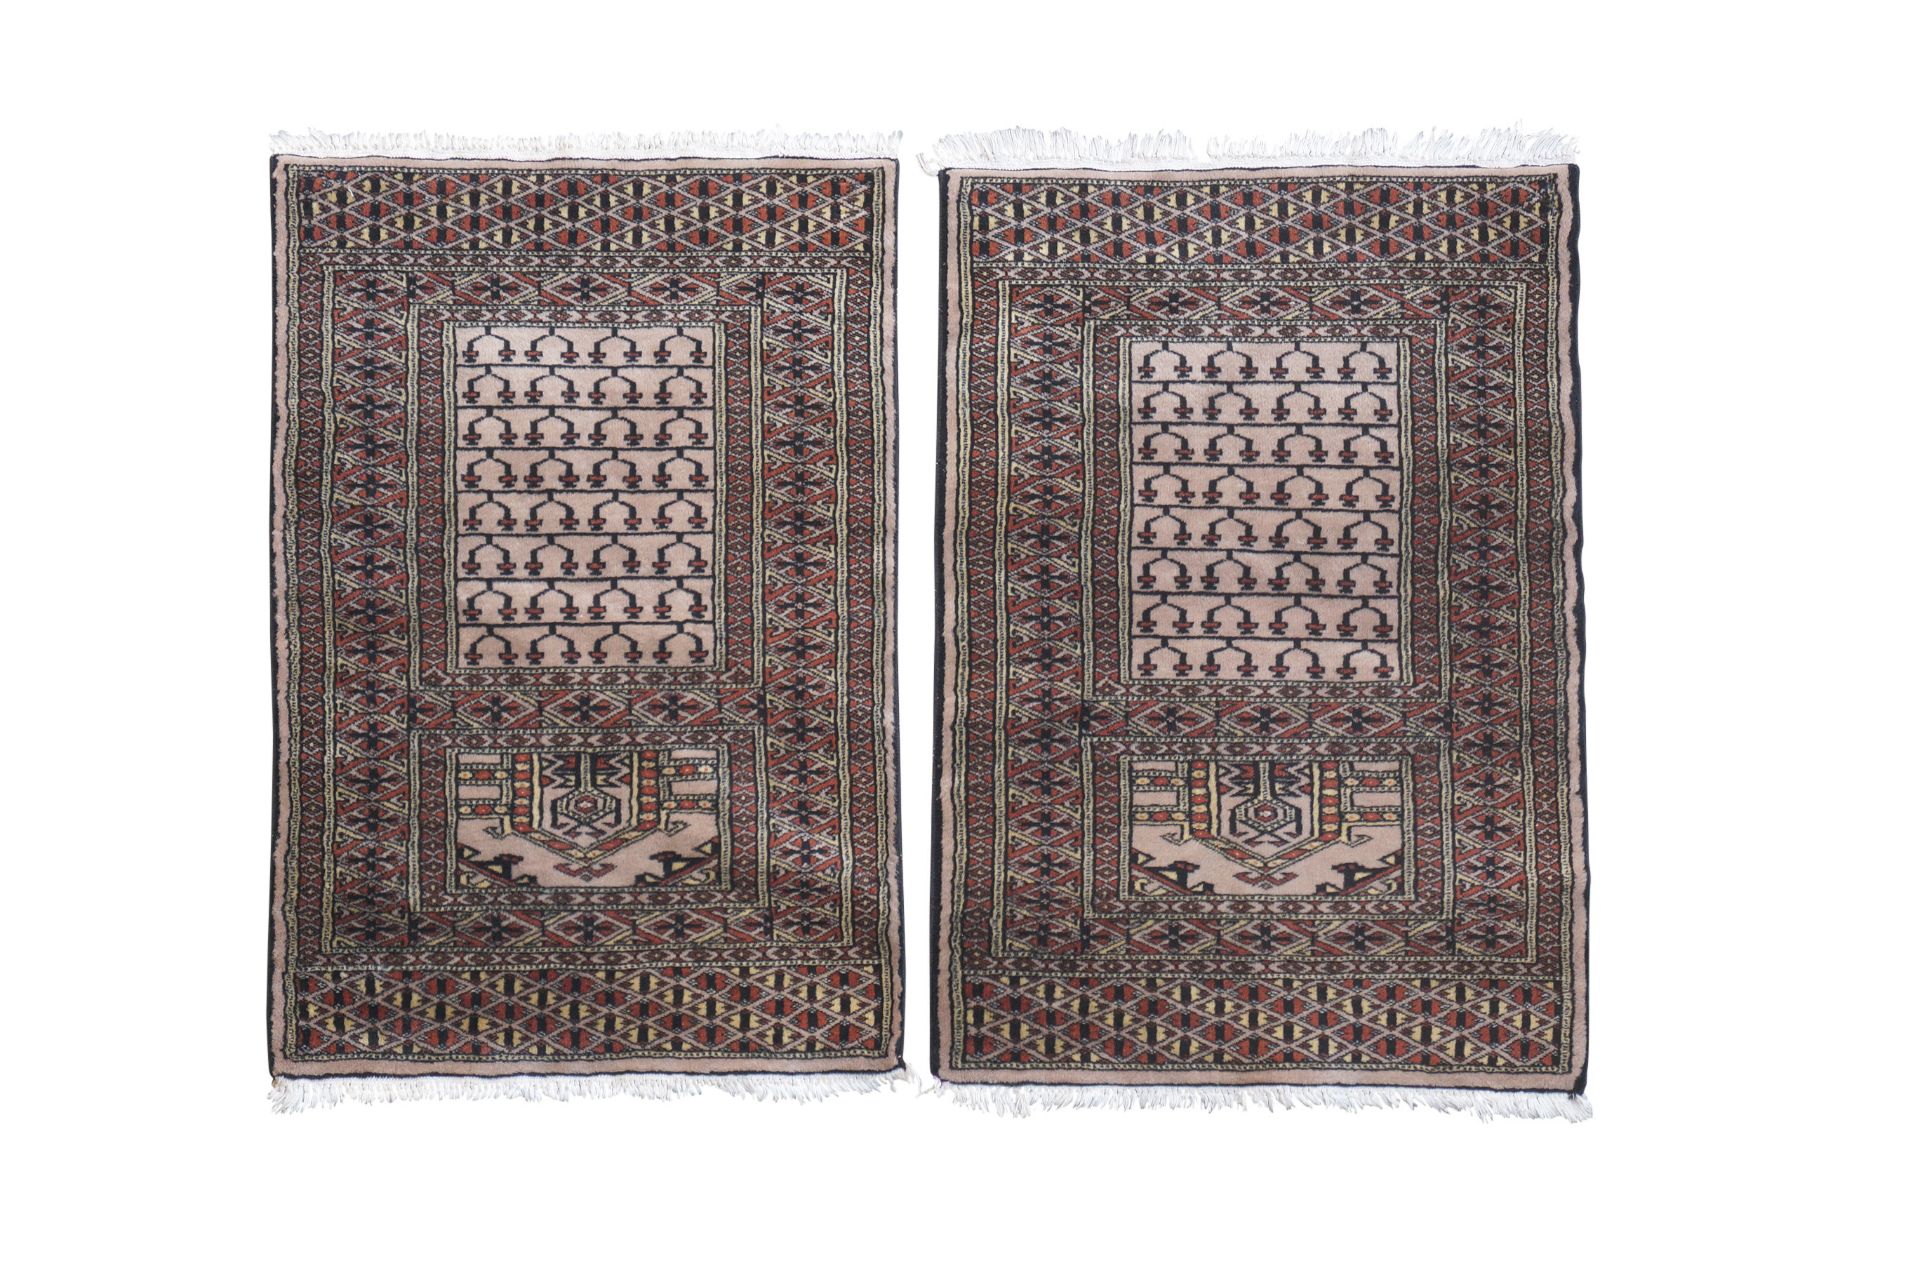 A pair of prayer rugs